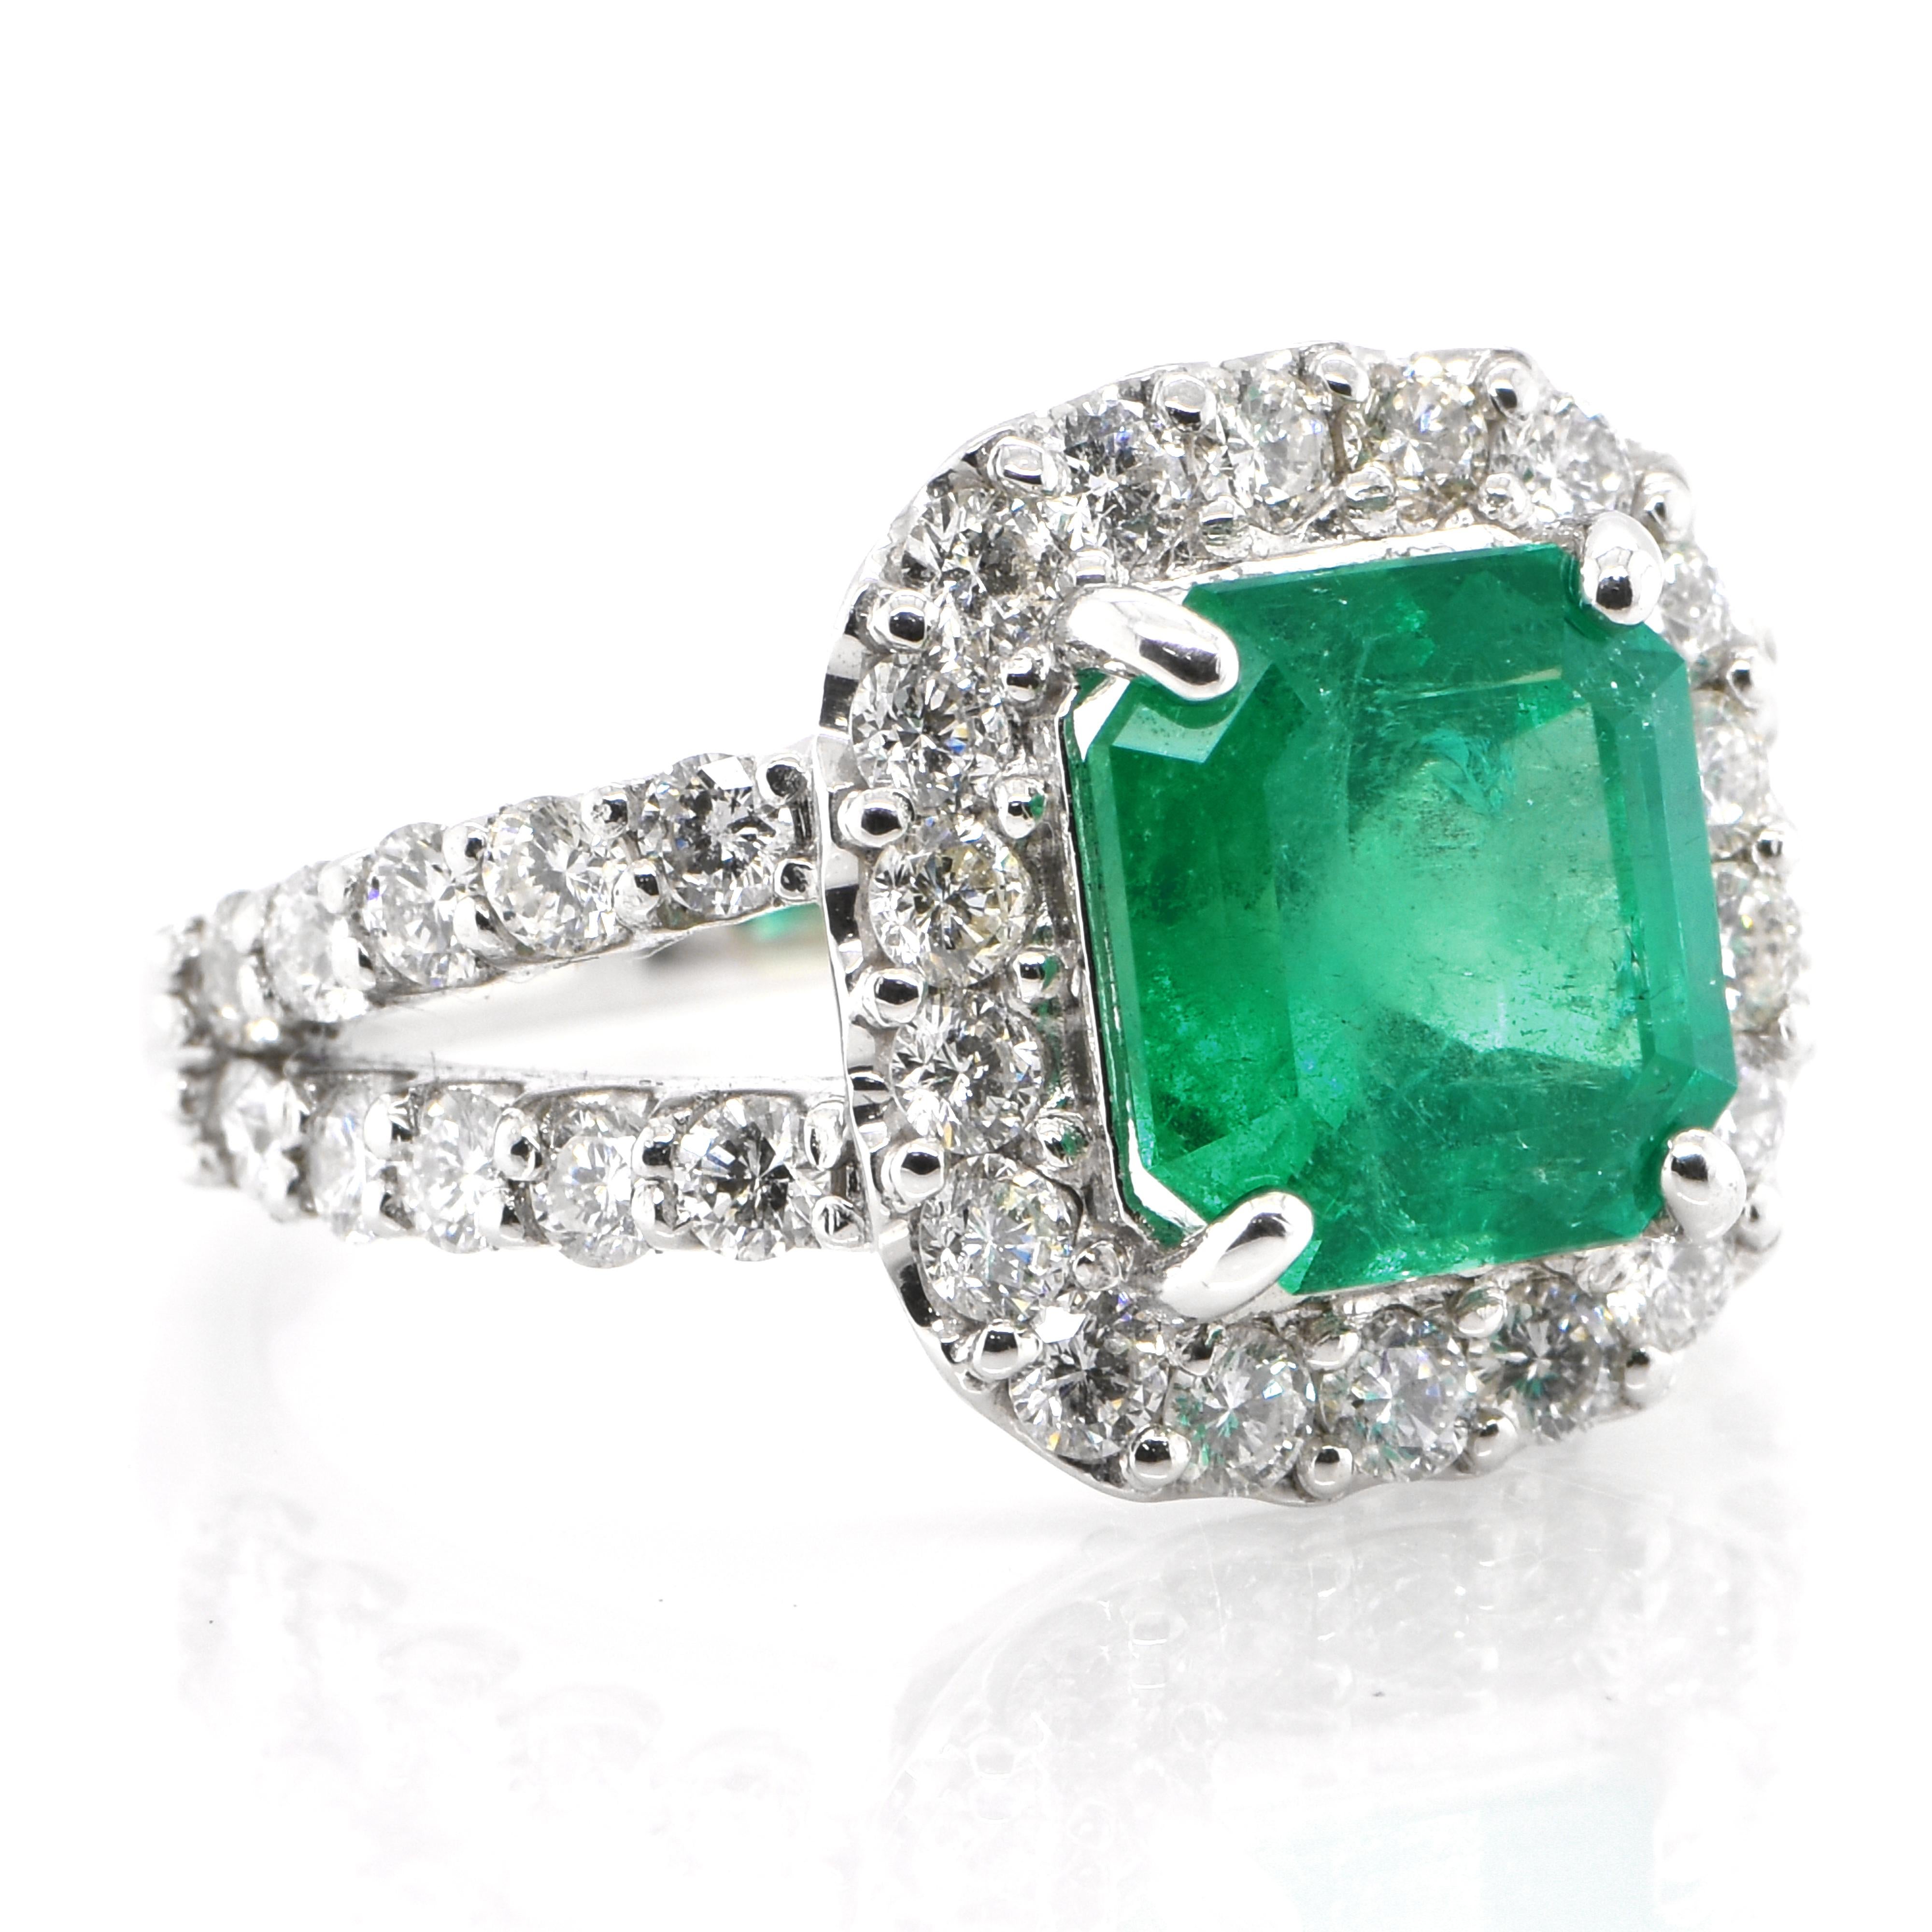 Emerald Cut 2.90 Carat Natural Emerald and Diamond Halo Ring Set in Platinum